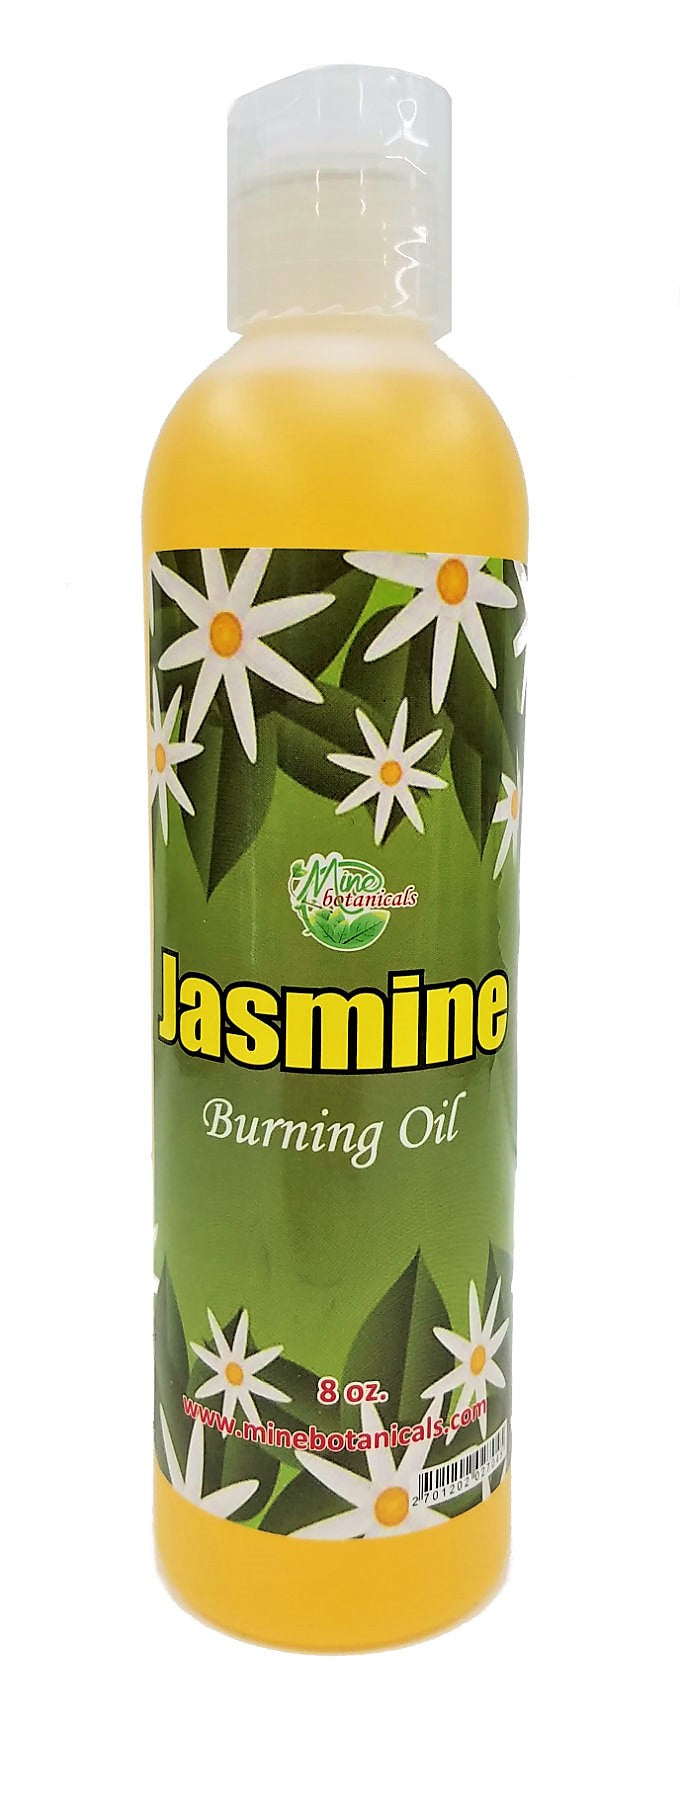 Jasmine Burning Oil